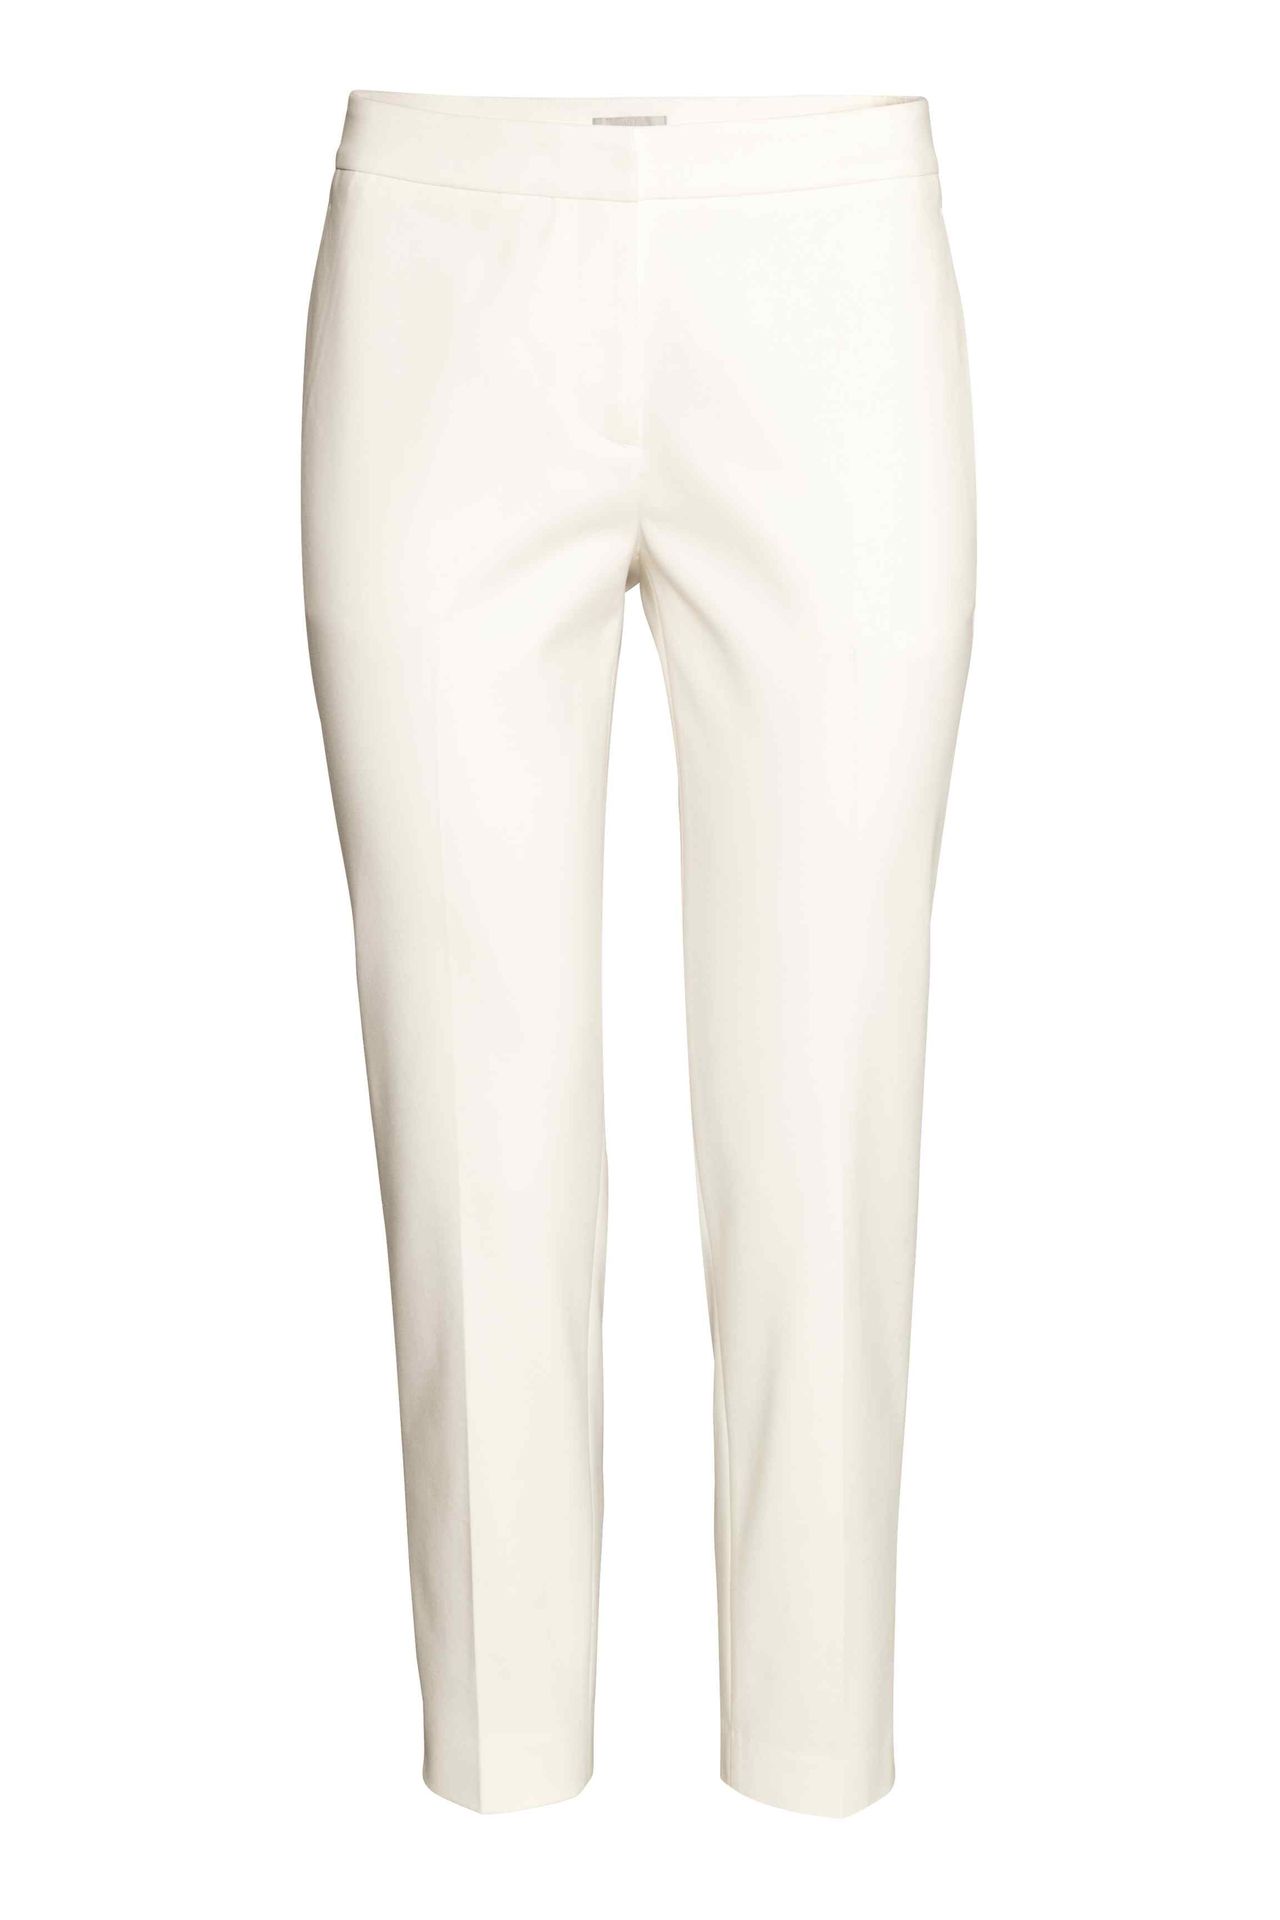 Spodnie garniturowe, H&M, 99,90 pln